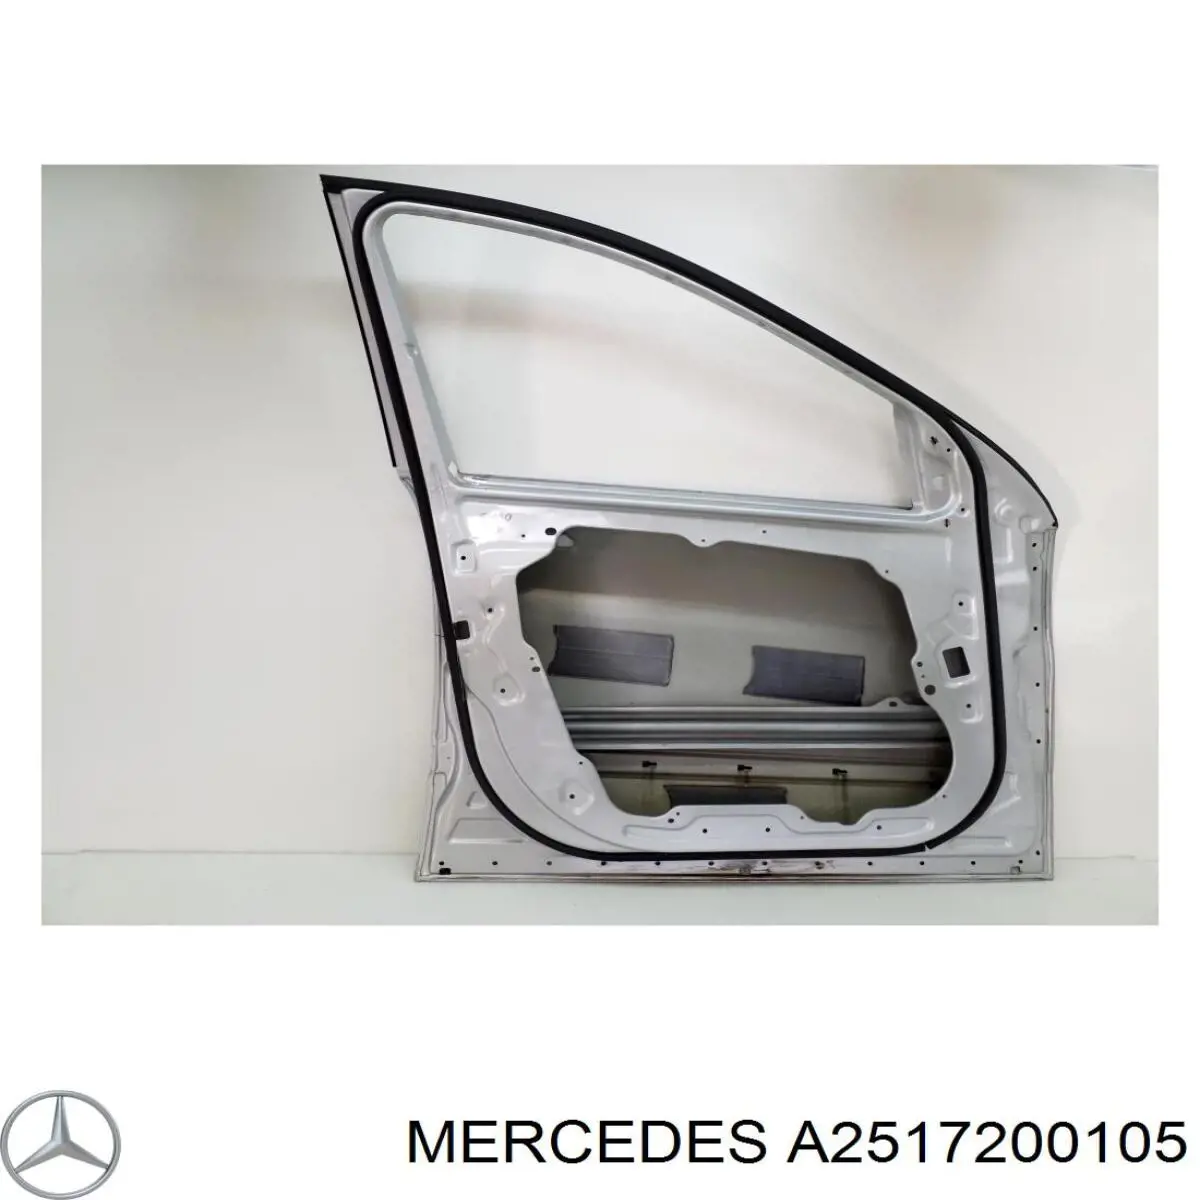 A2517200105 Mercedes puerta delantera izquierda